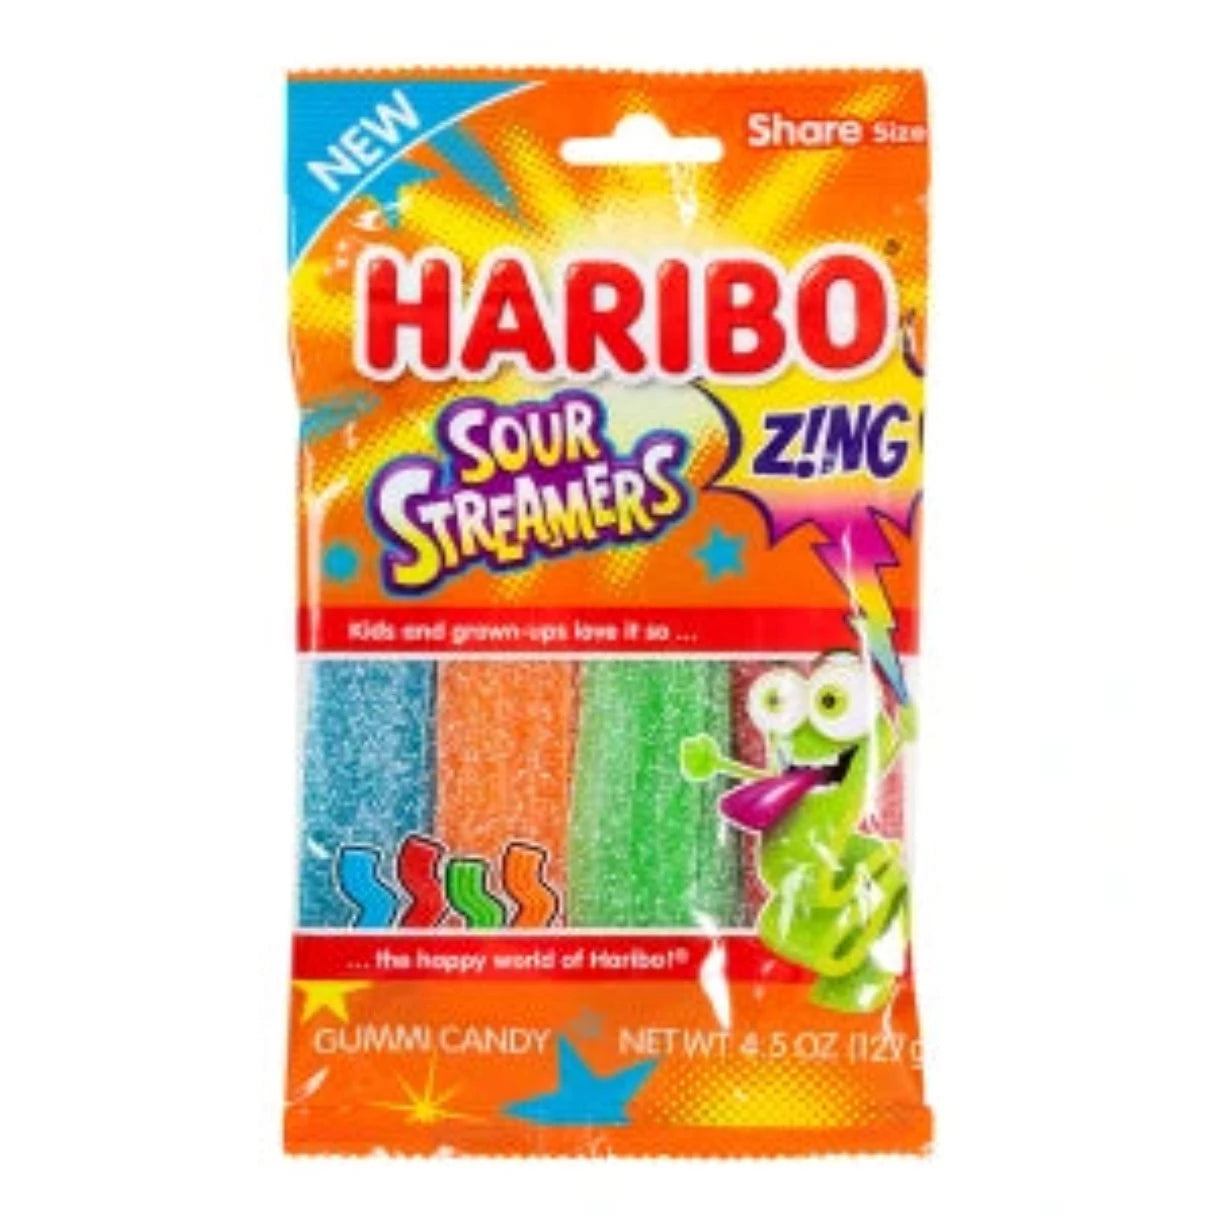 Haribo Zing Sour Streamers Gummi Candy 4.5oz - 12ct